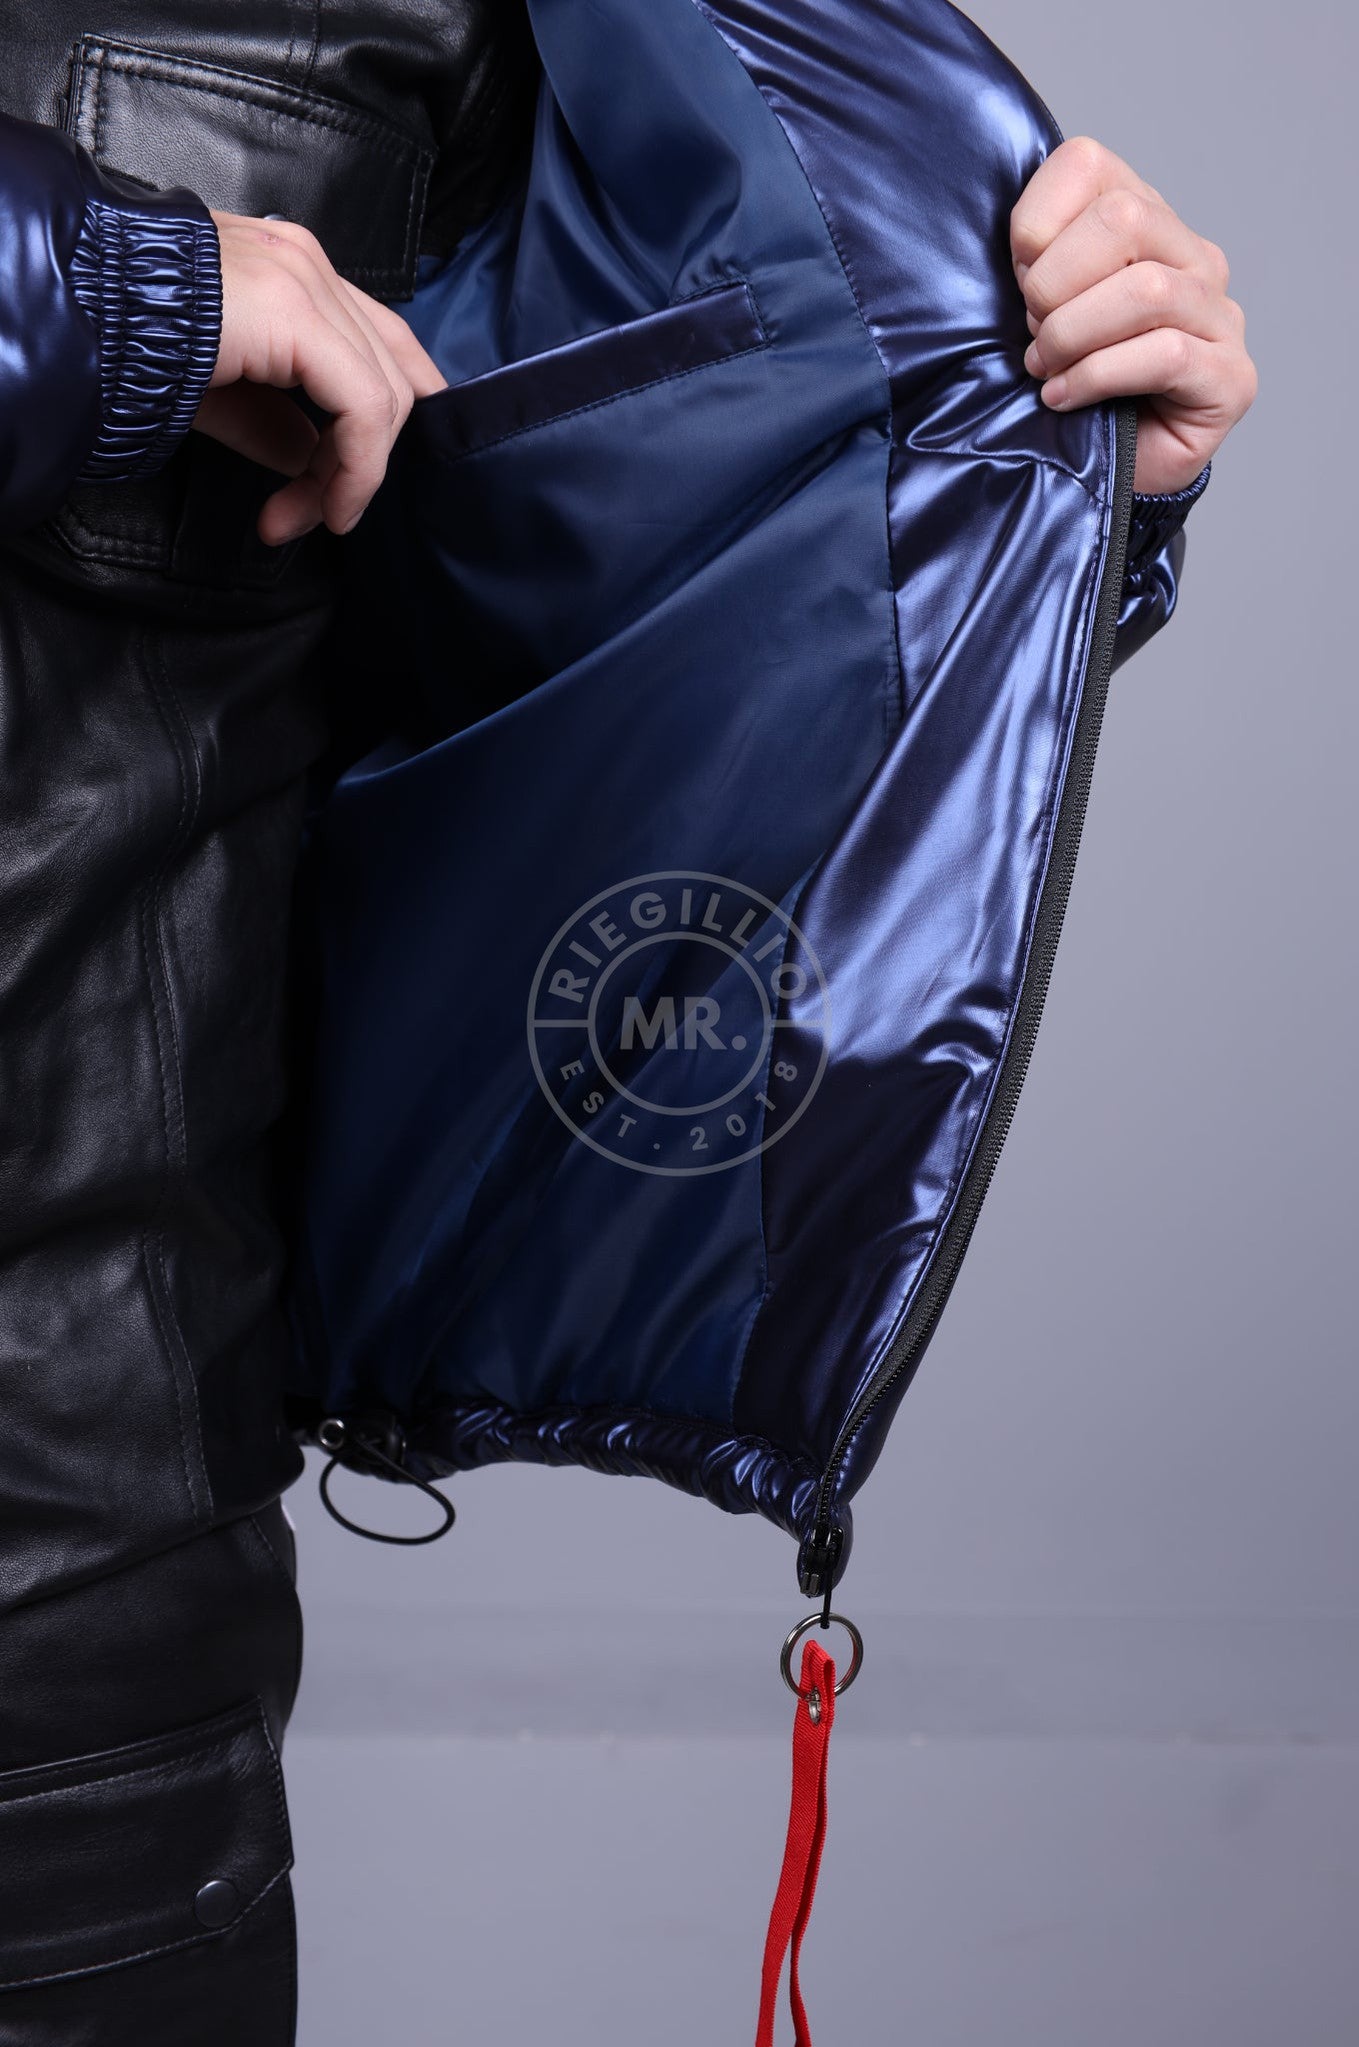 PVC Puffer Jacket - Metallic Blue at MR. Riegillio